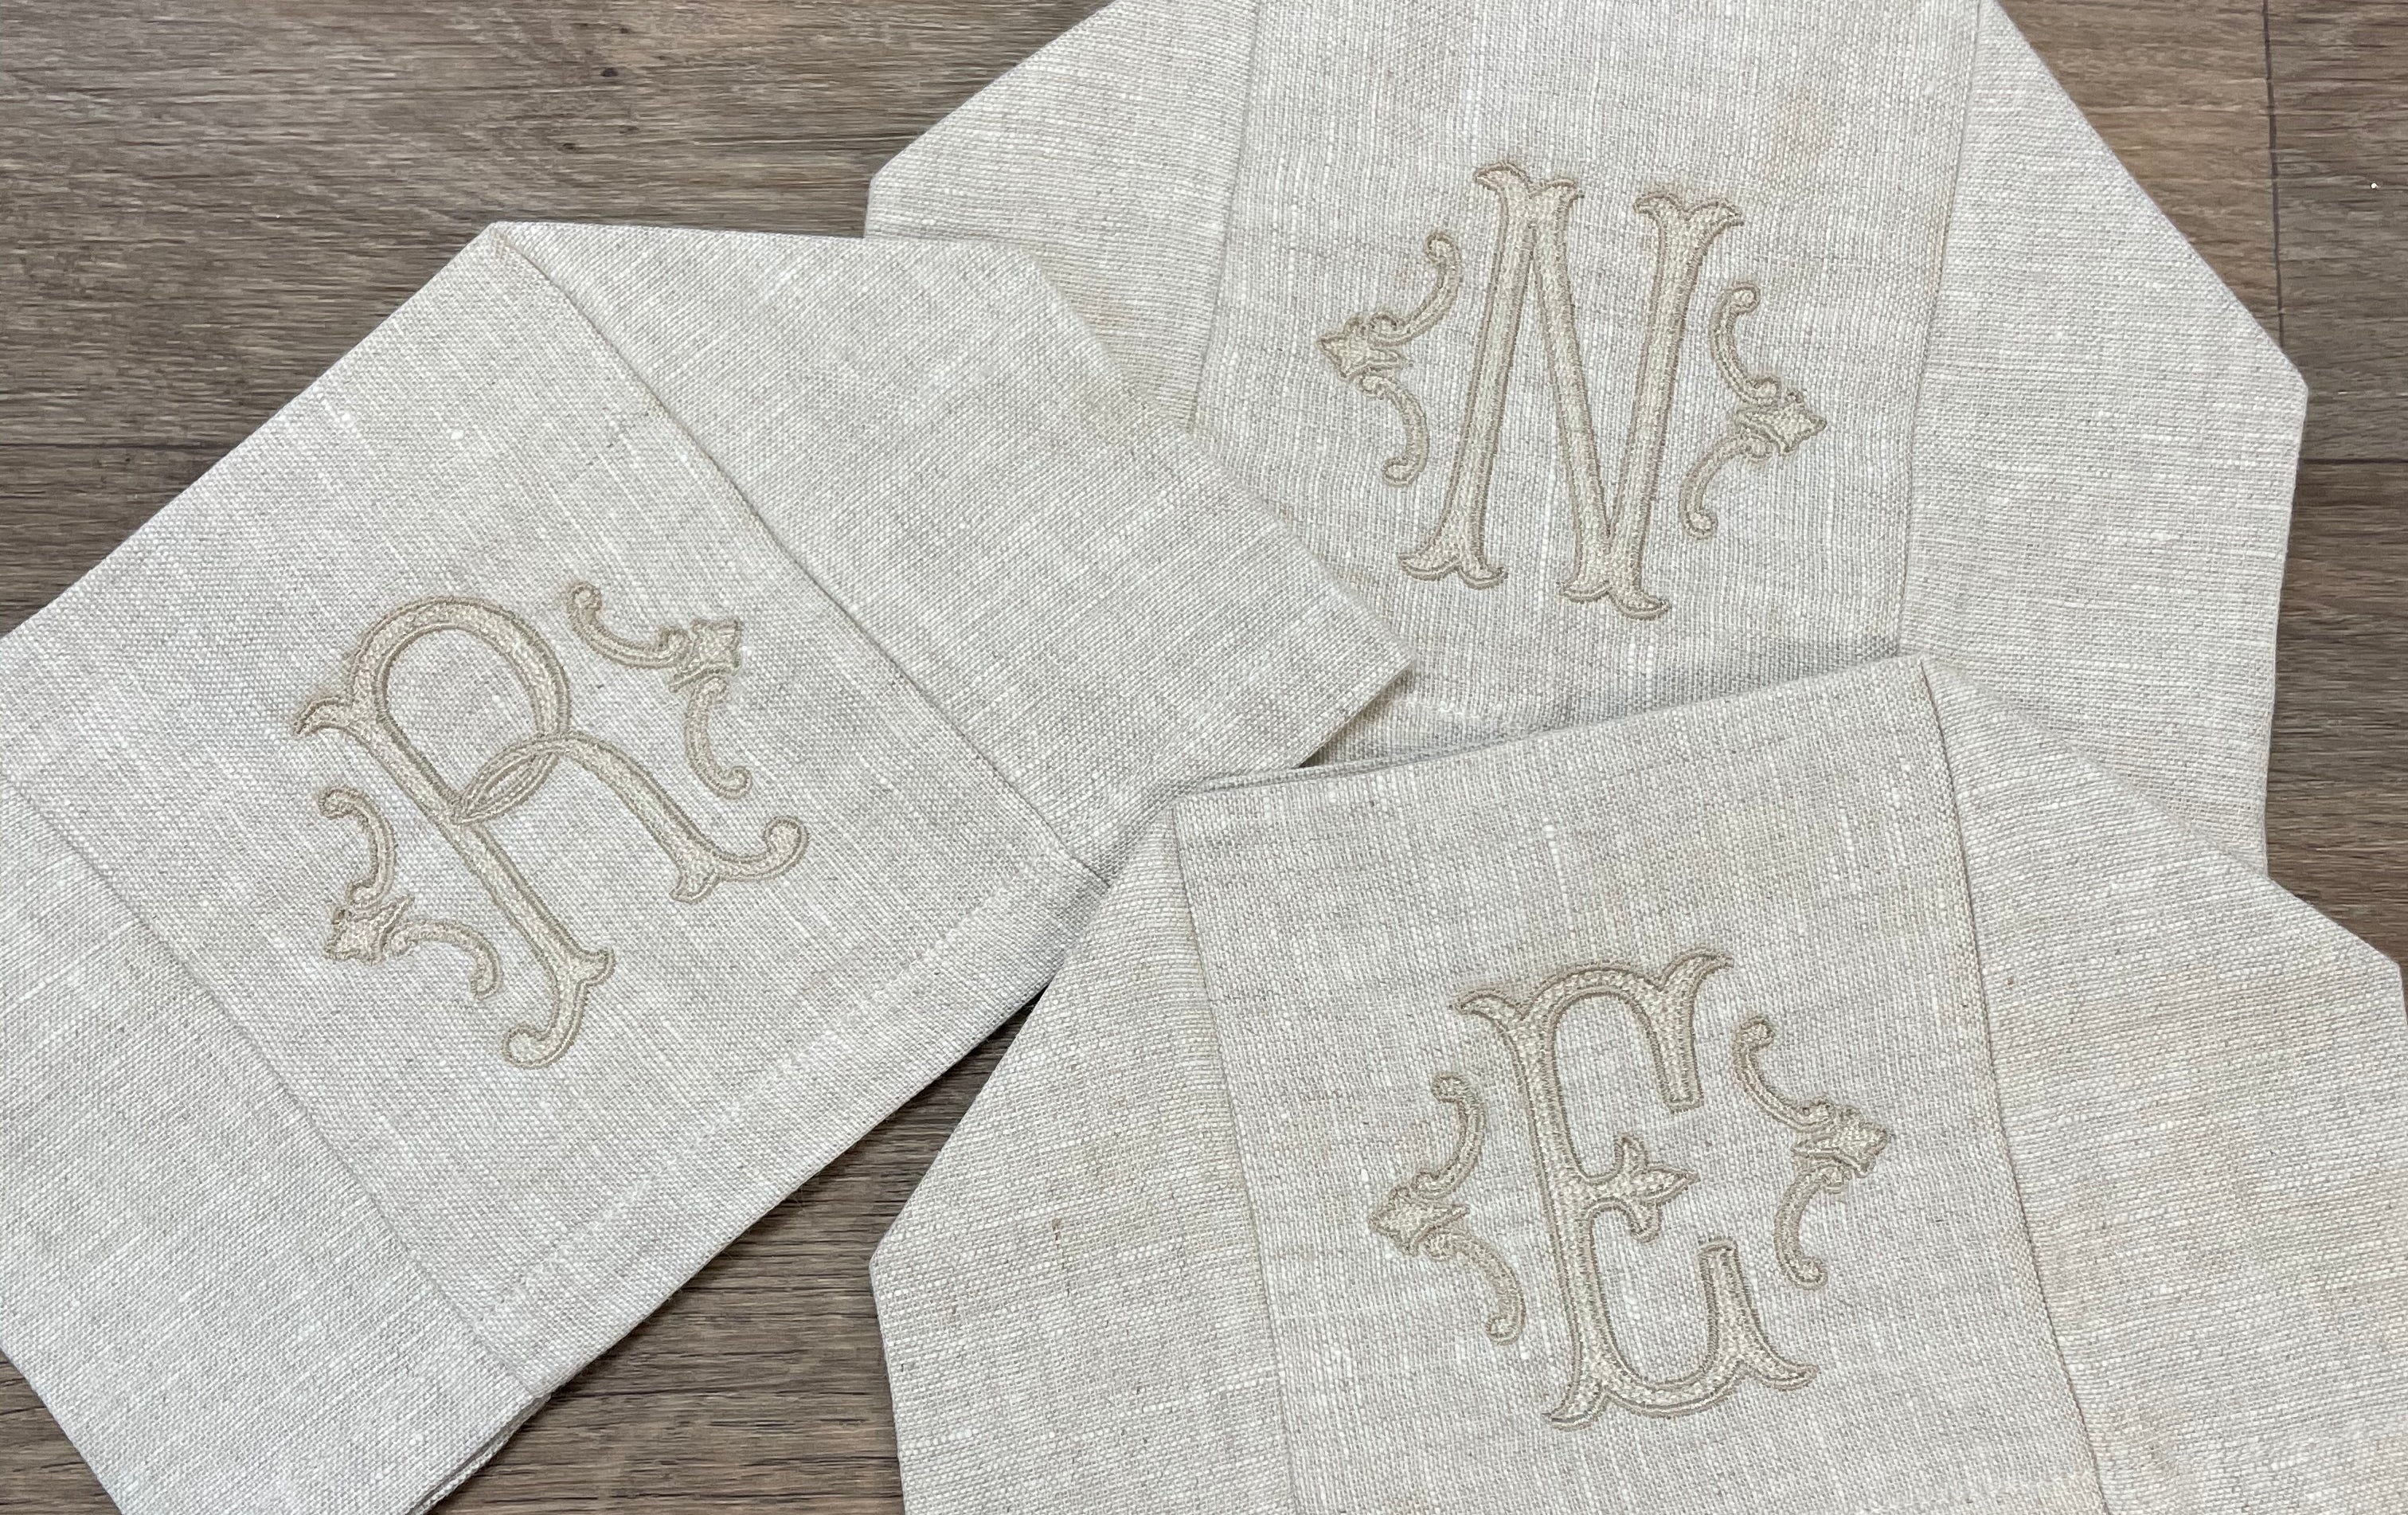 The Artful monogram custom embroidery